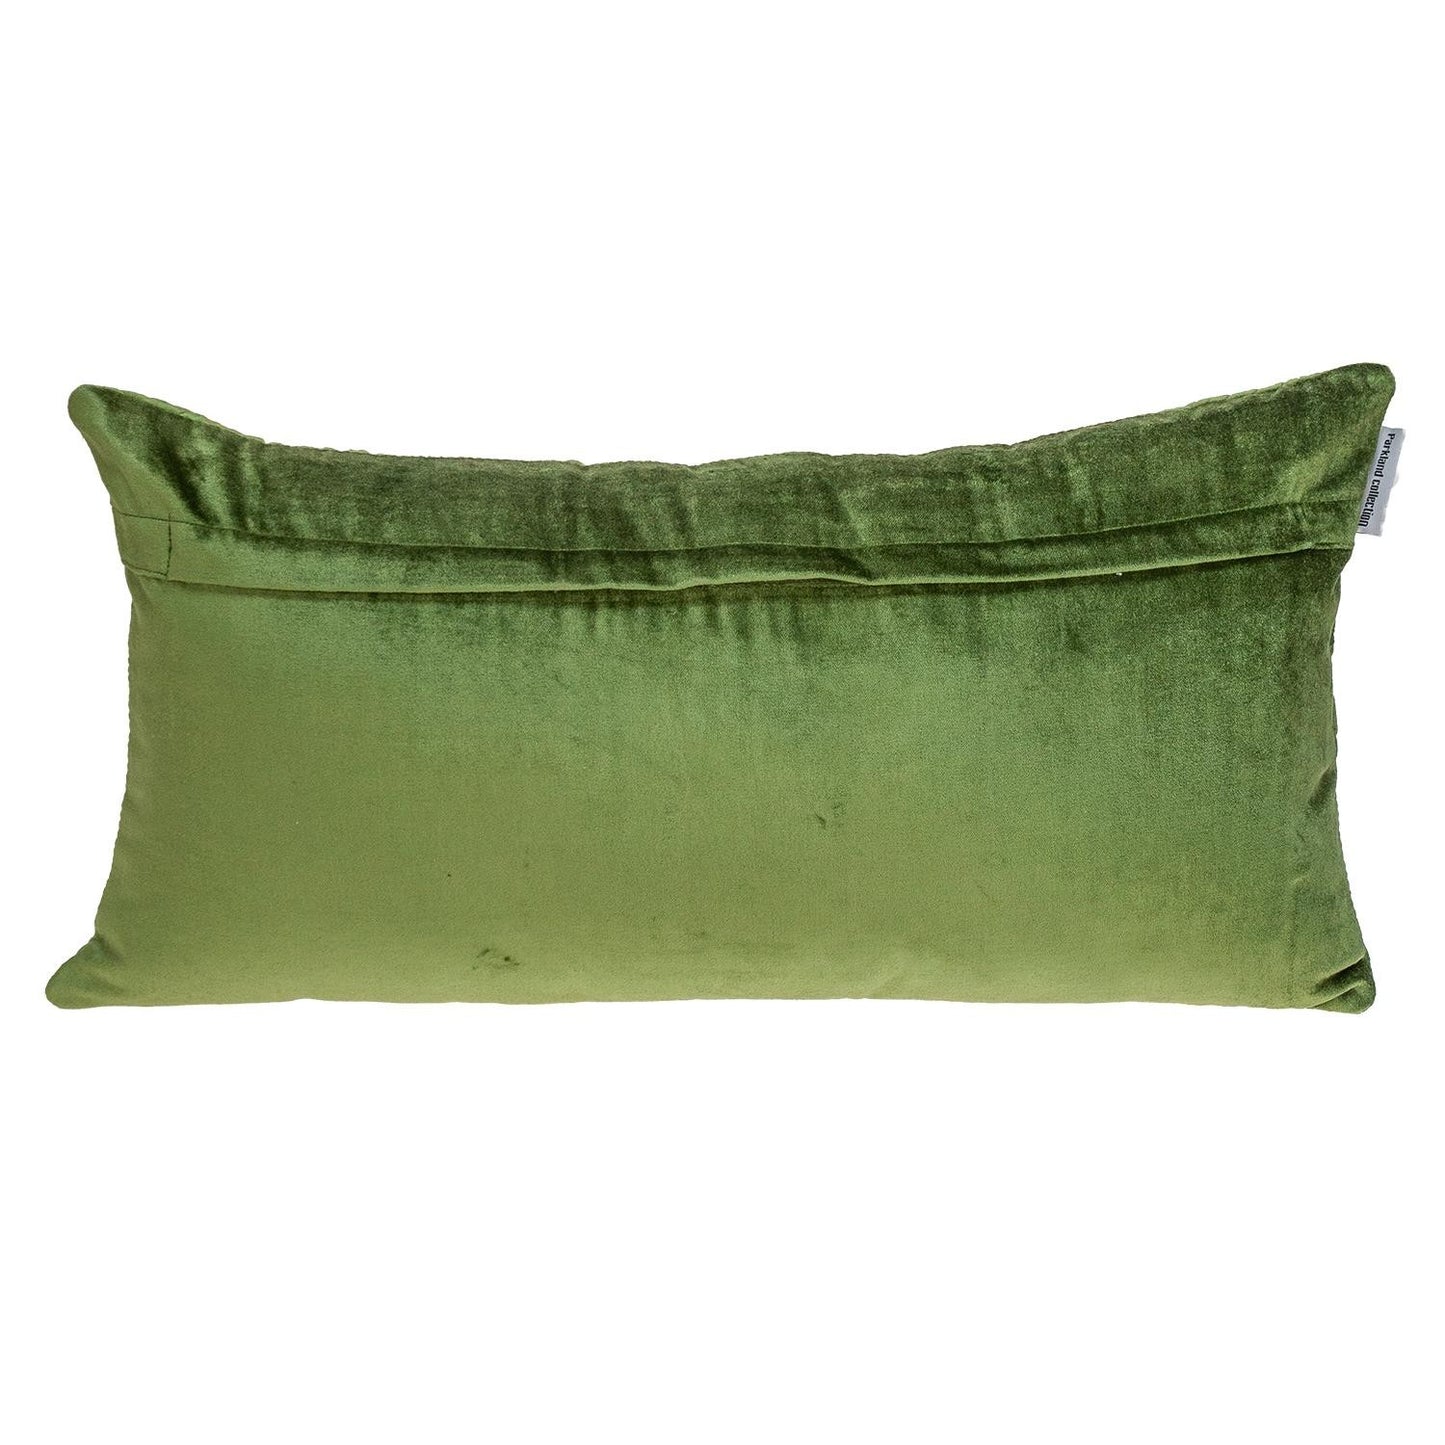 Tufted Diamonds Olive Velvet Lumbar Accent Pillow